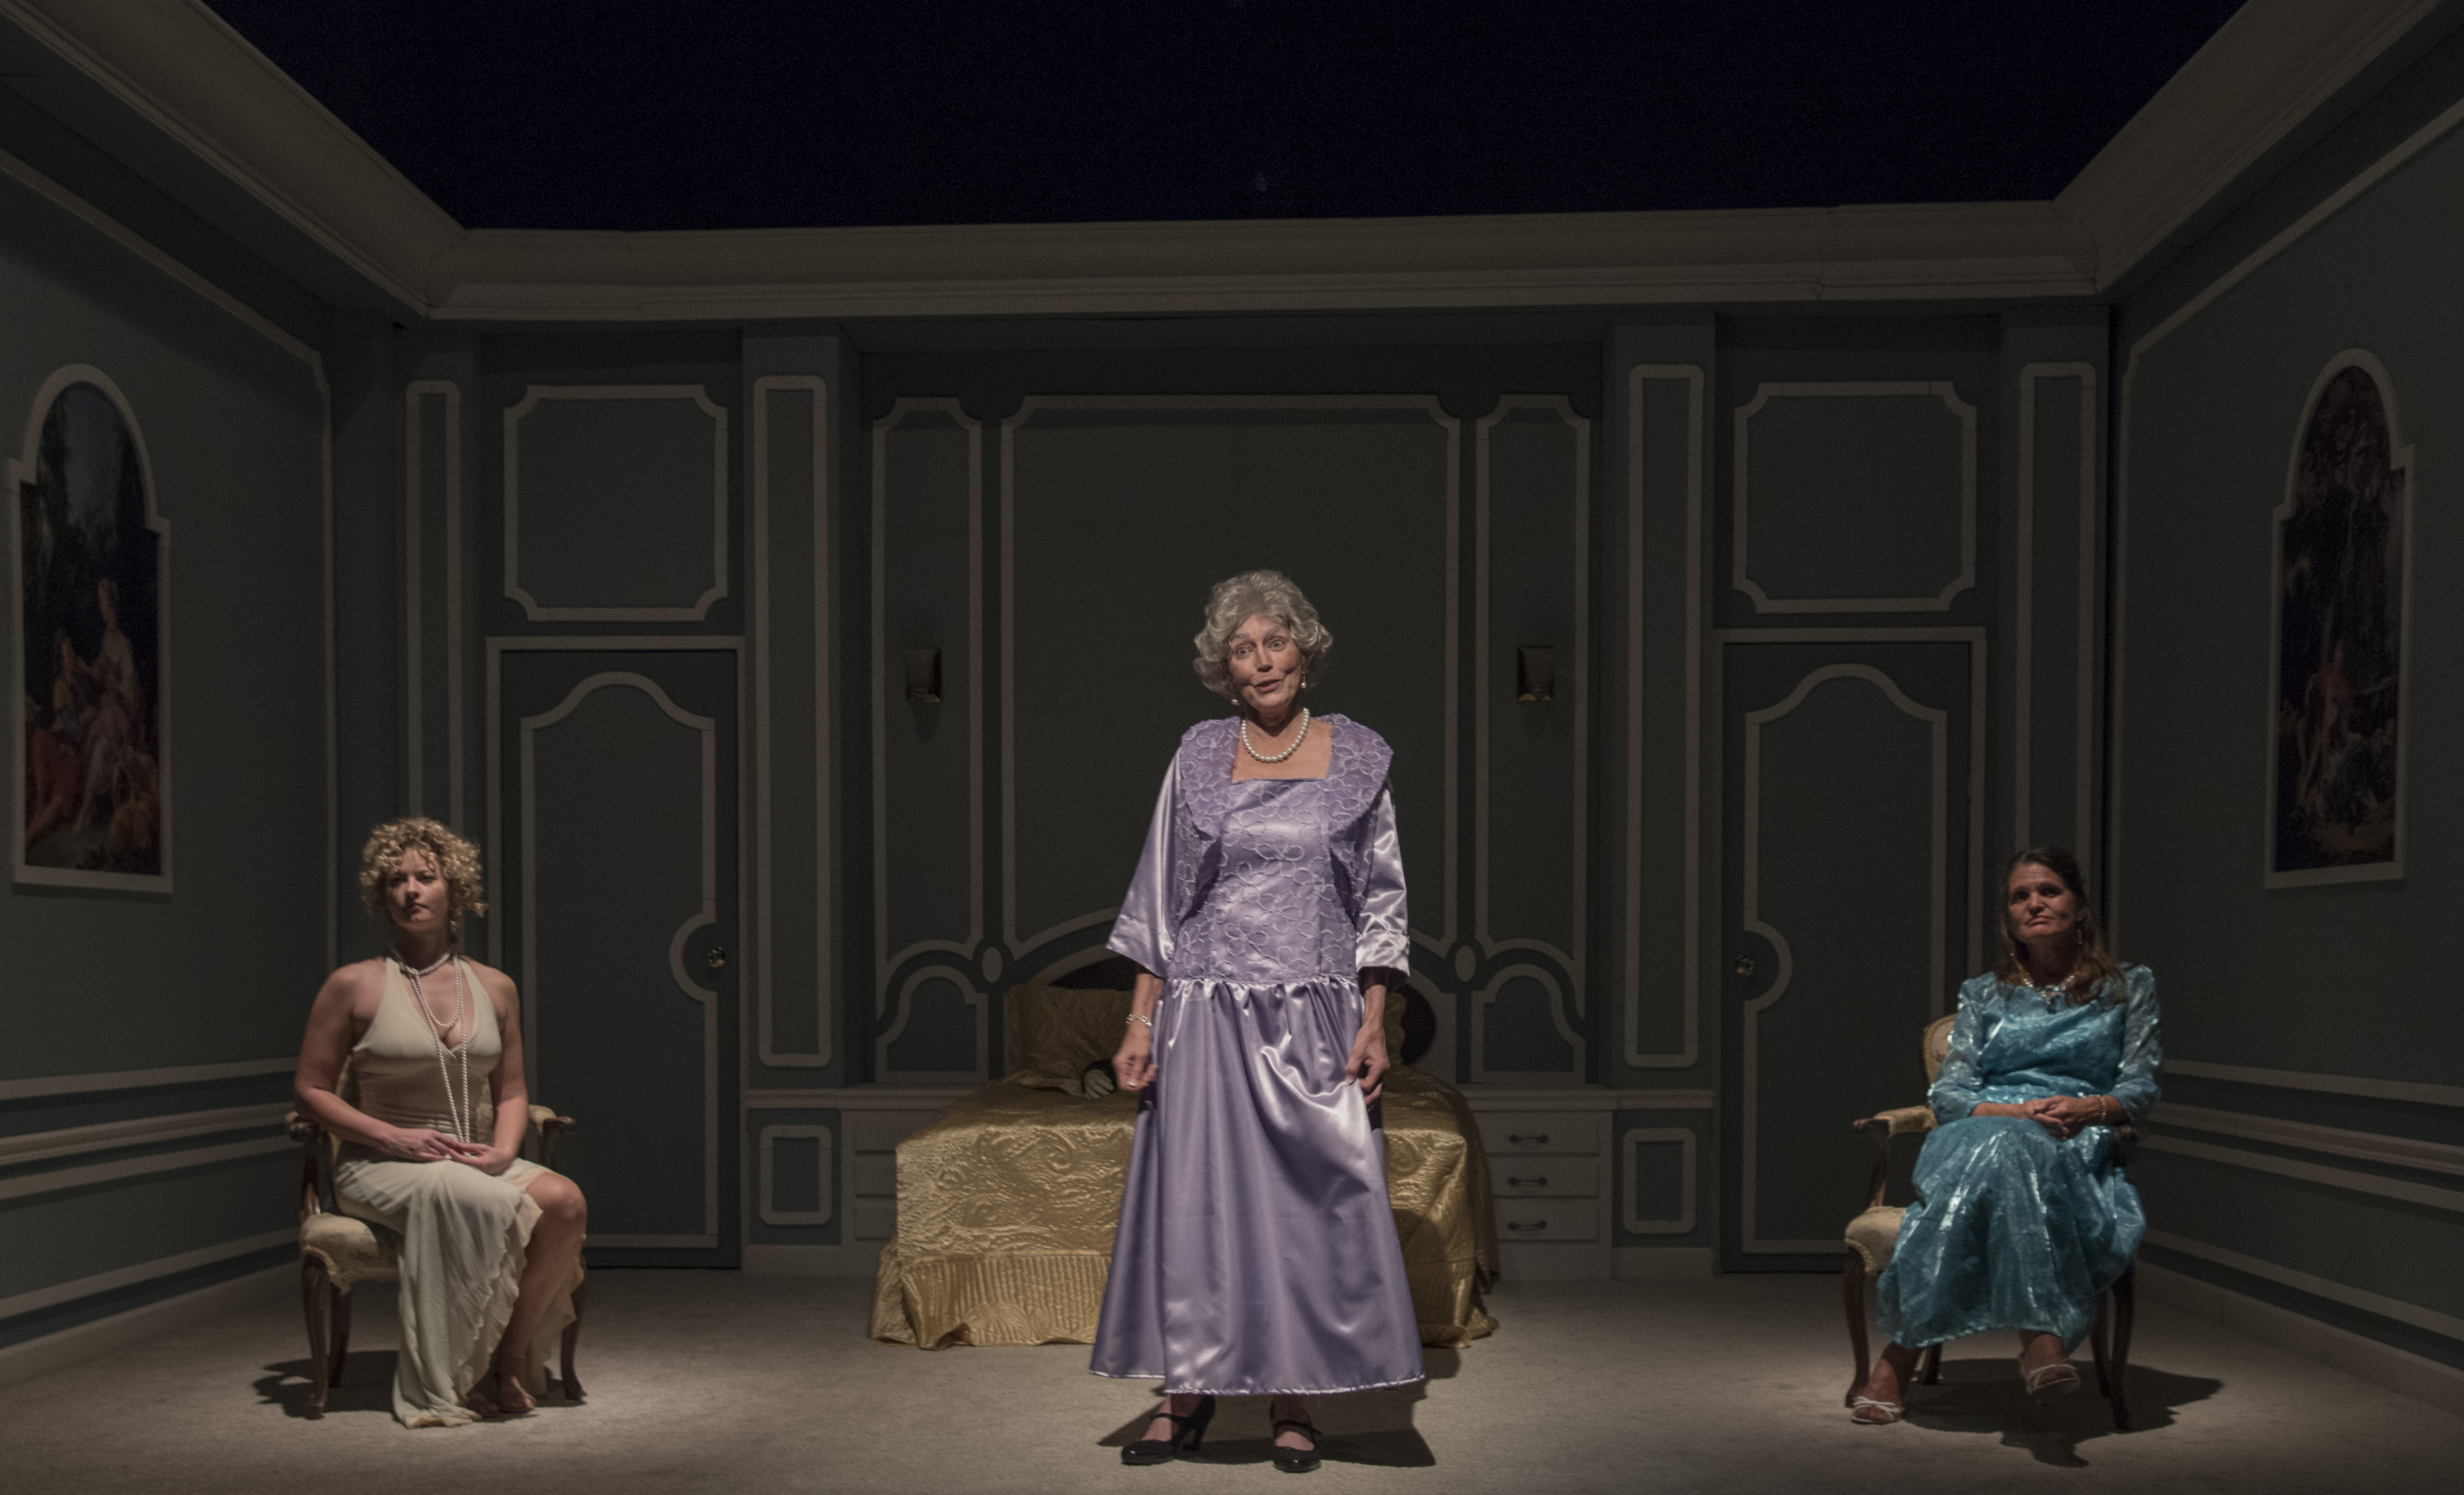 Edward Albee's Three Tall (and Amazing) Women on Broadway – front mezz  junkies